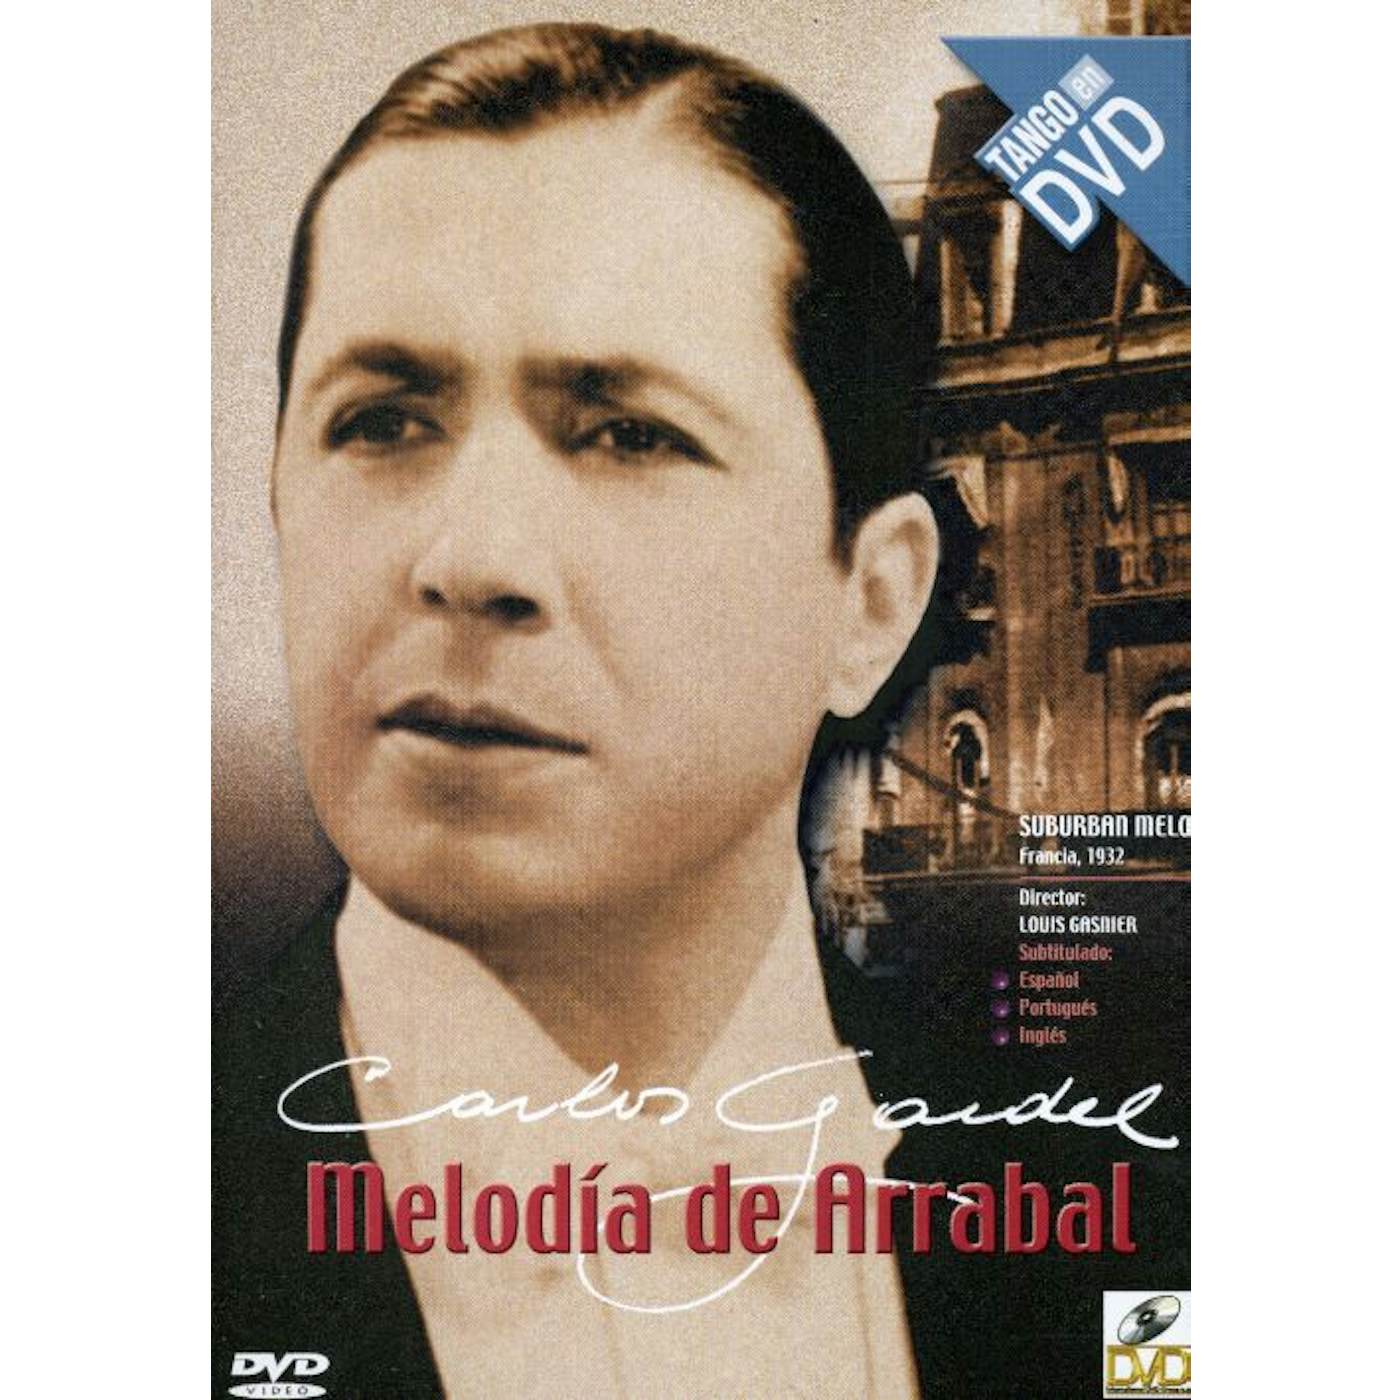 Carlos Gardel MELODIA DE ARRABAL DVD